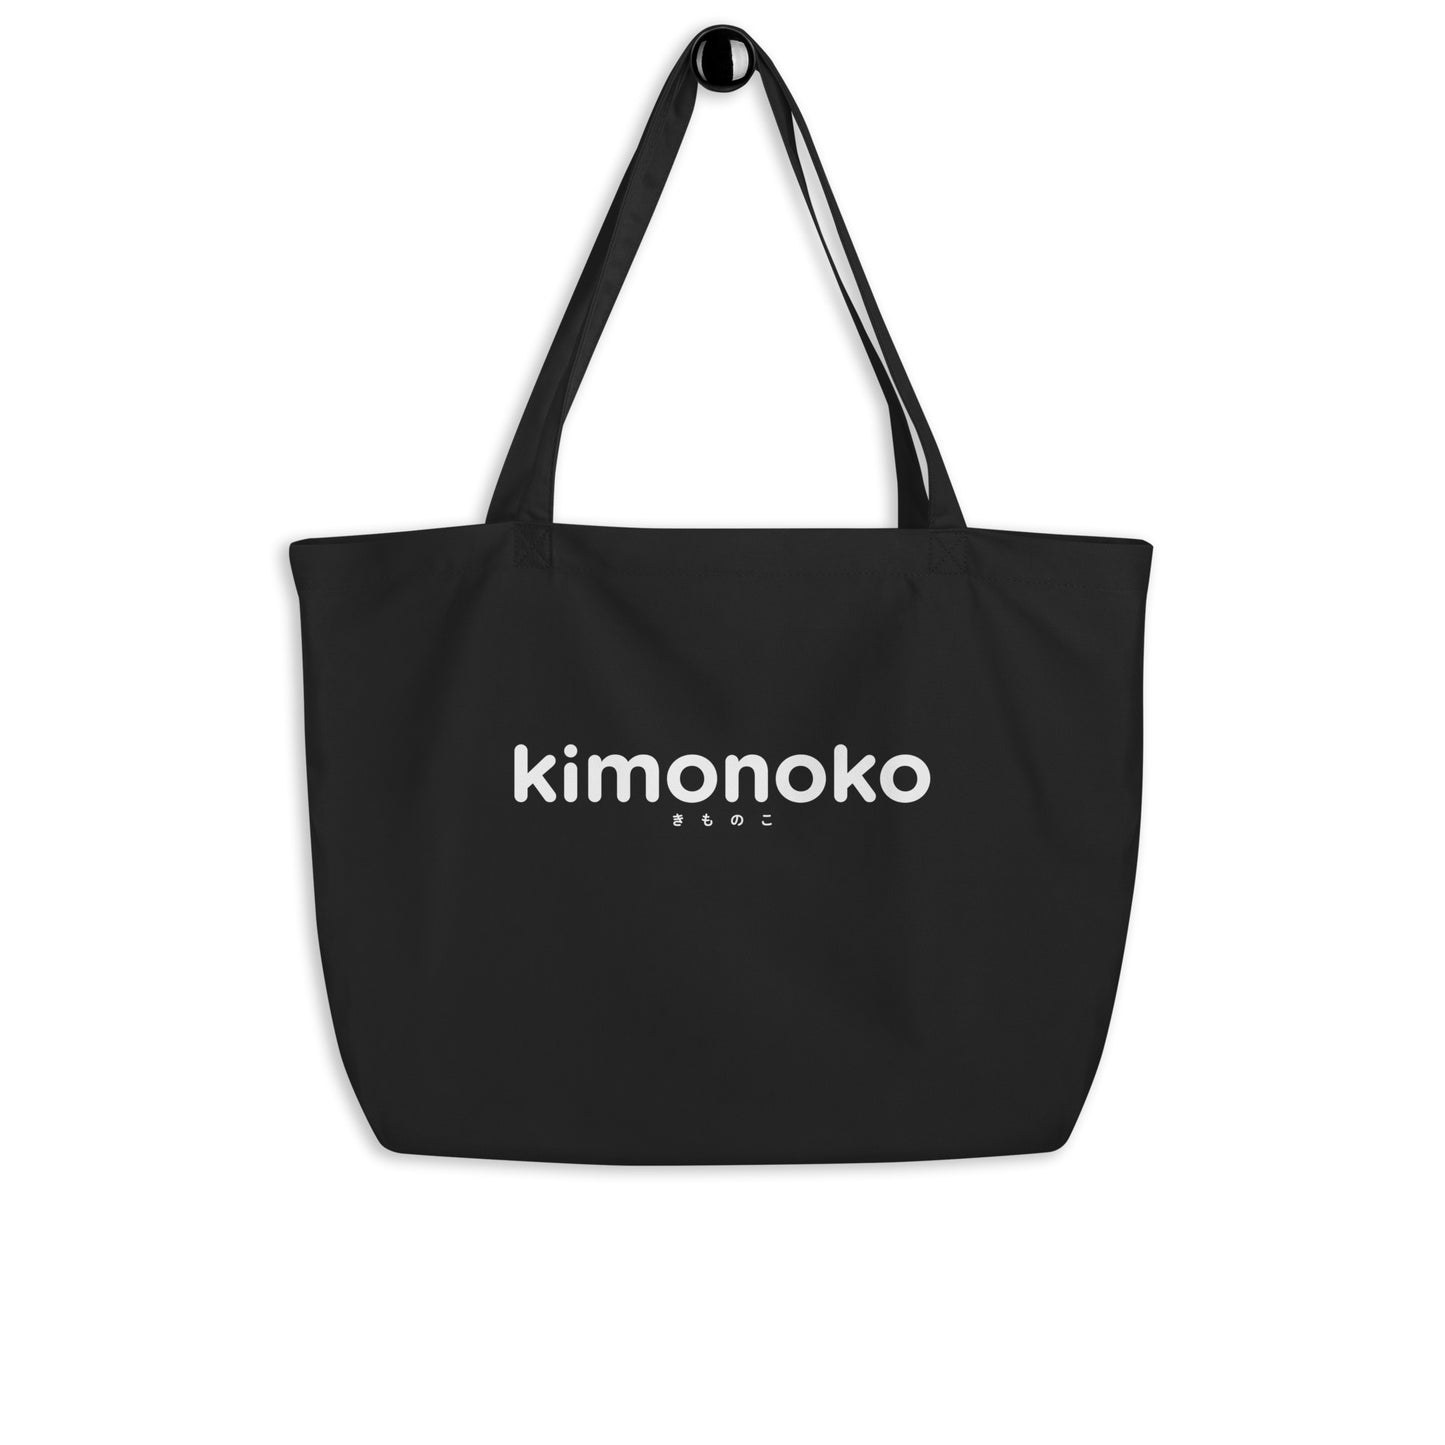 Organic tote bag for kimonoko W